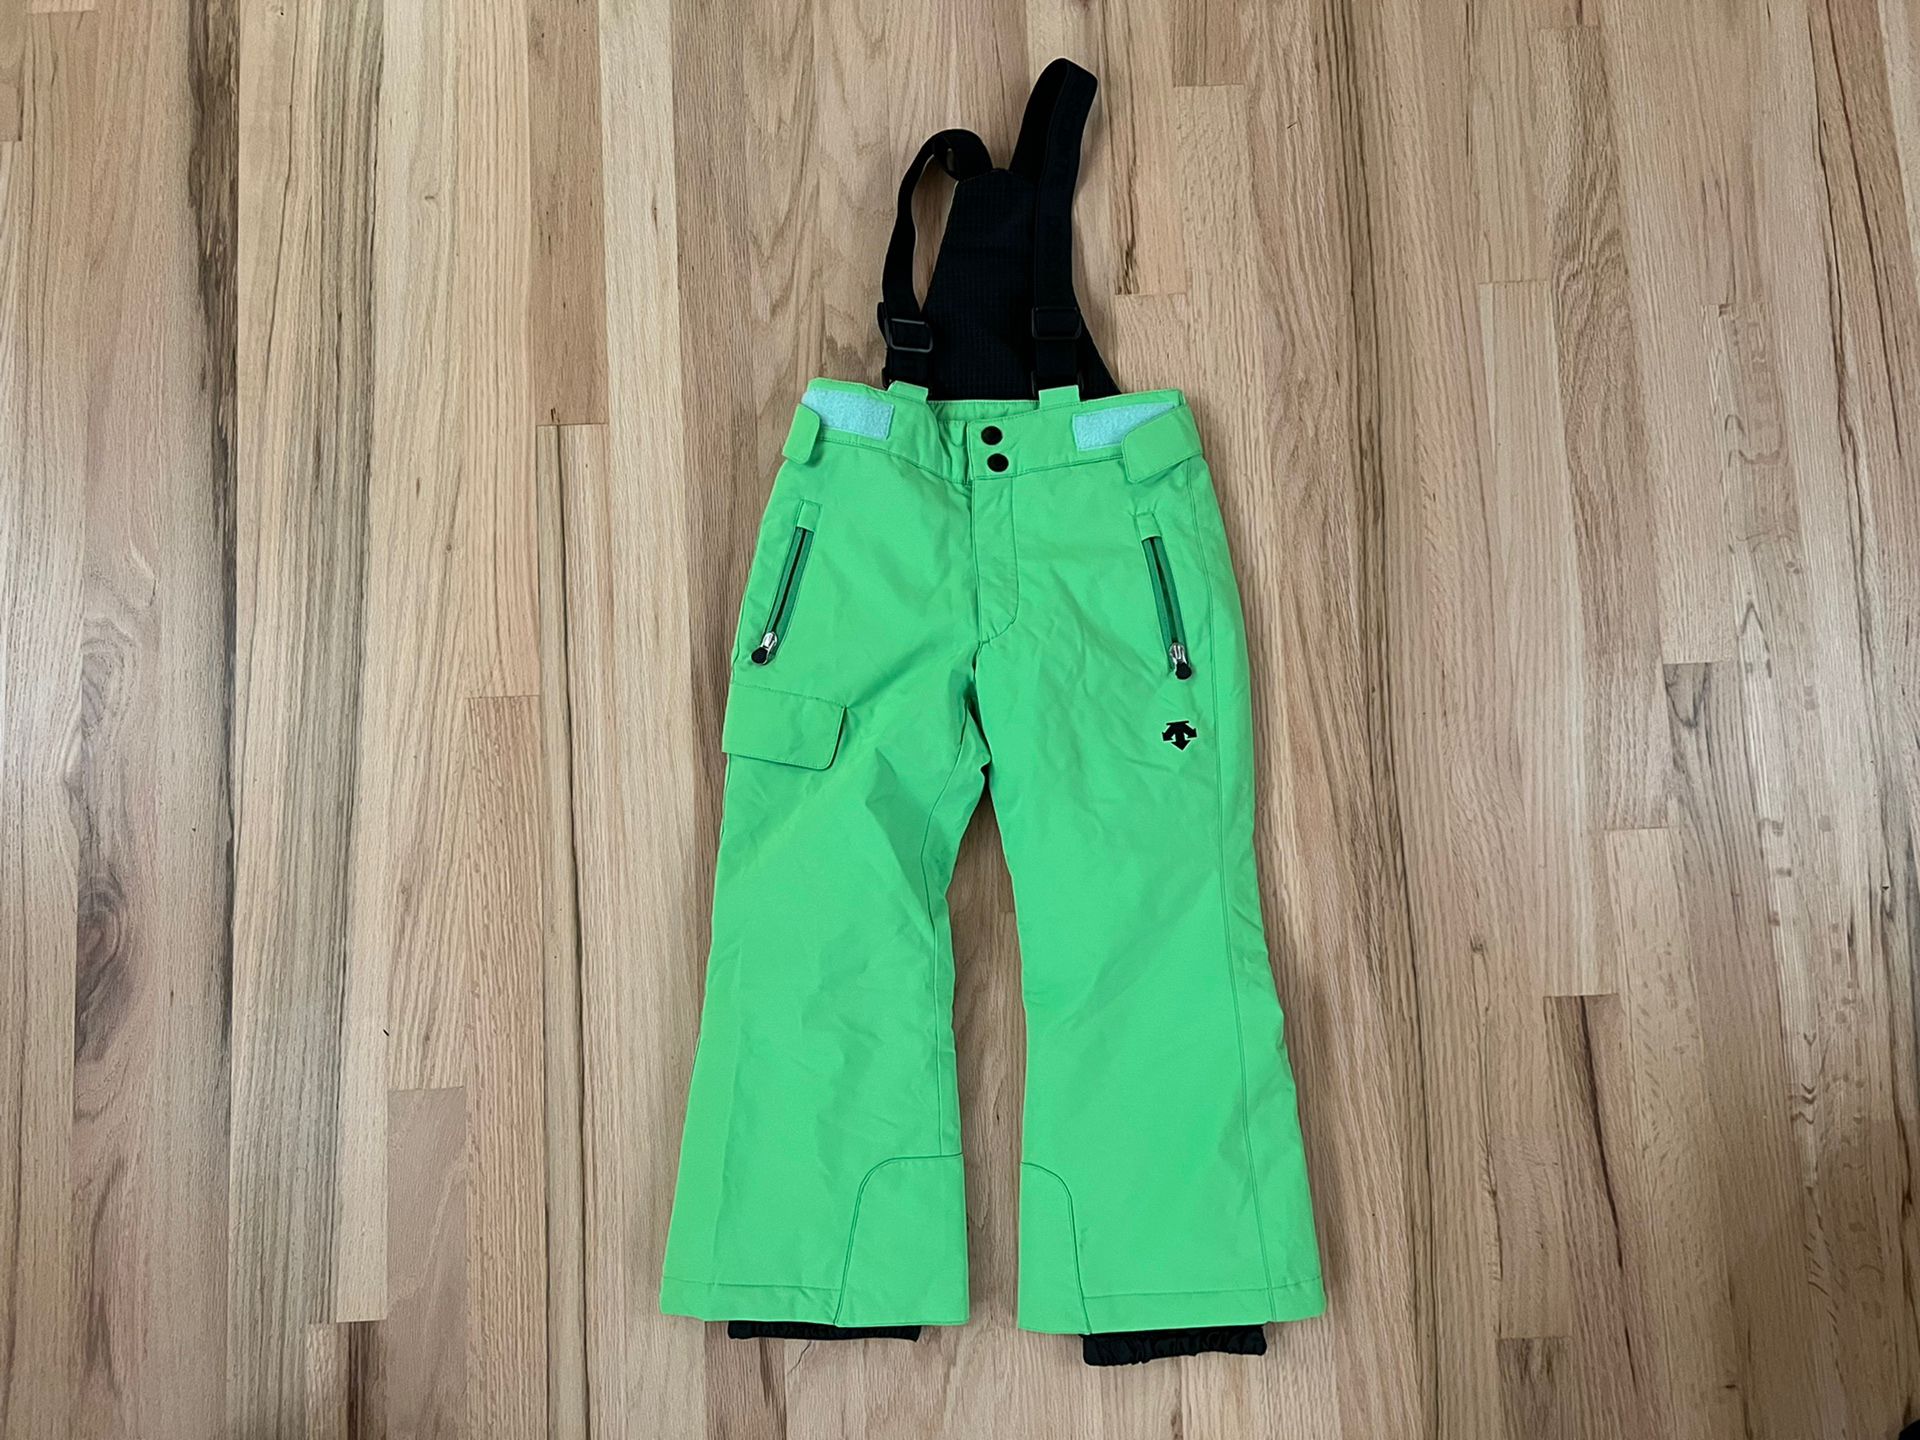 Descente JR Carve Ski Pants - New - Size 4